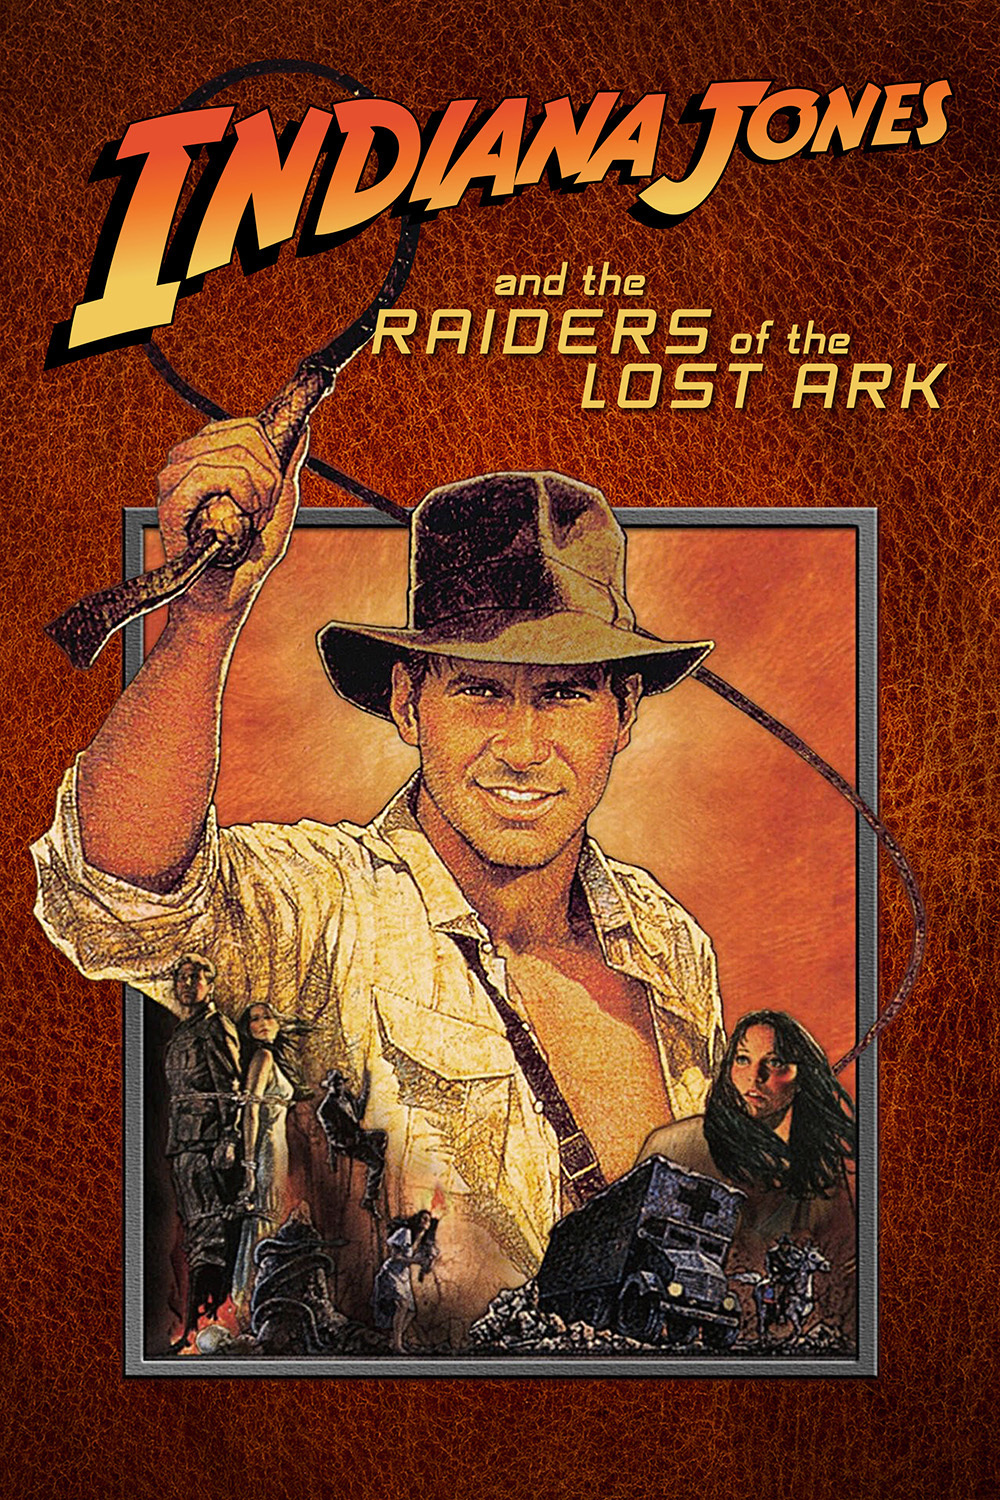 raiders-of-the-lost-ark-poster.jpg